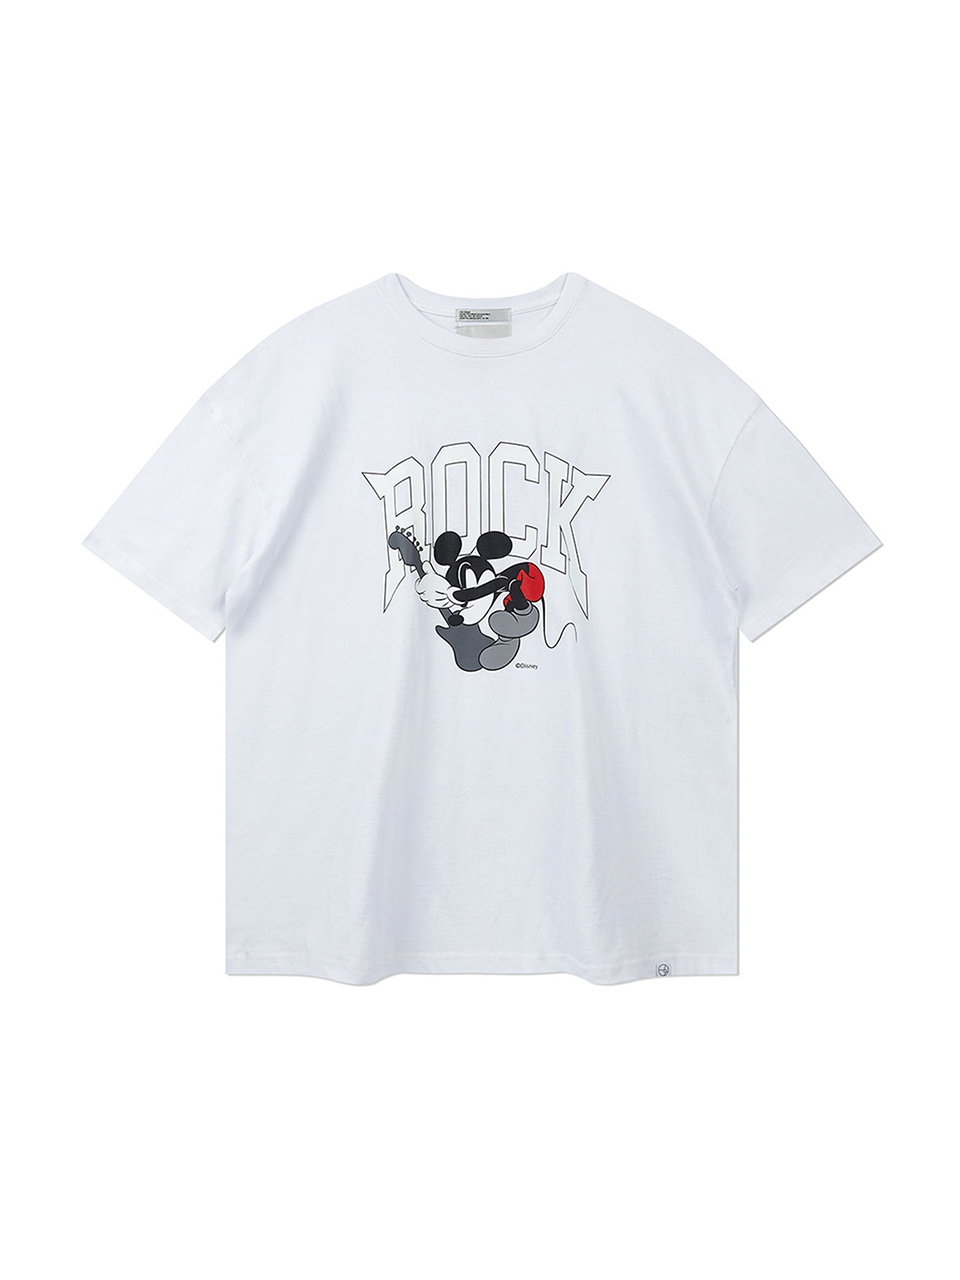 SOUNDSLIFE - Mickey Rock T-Shirt White